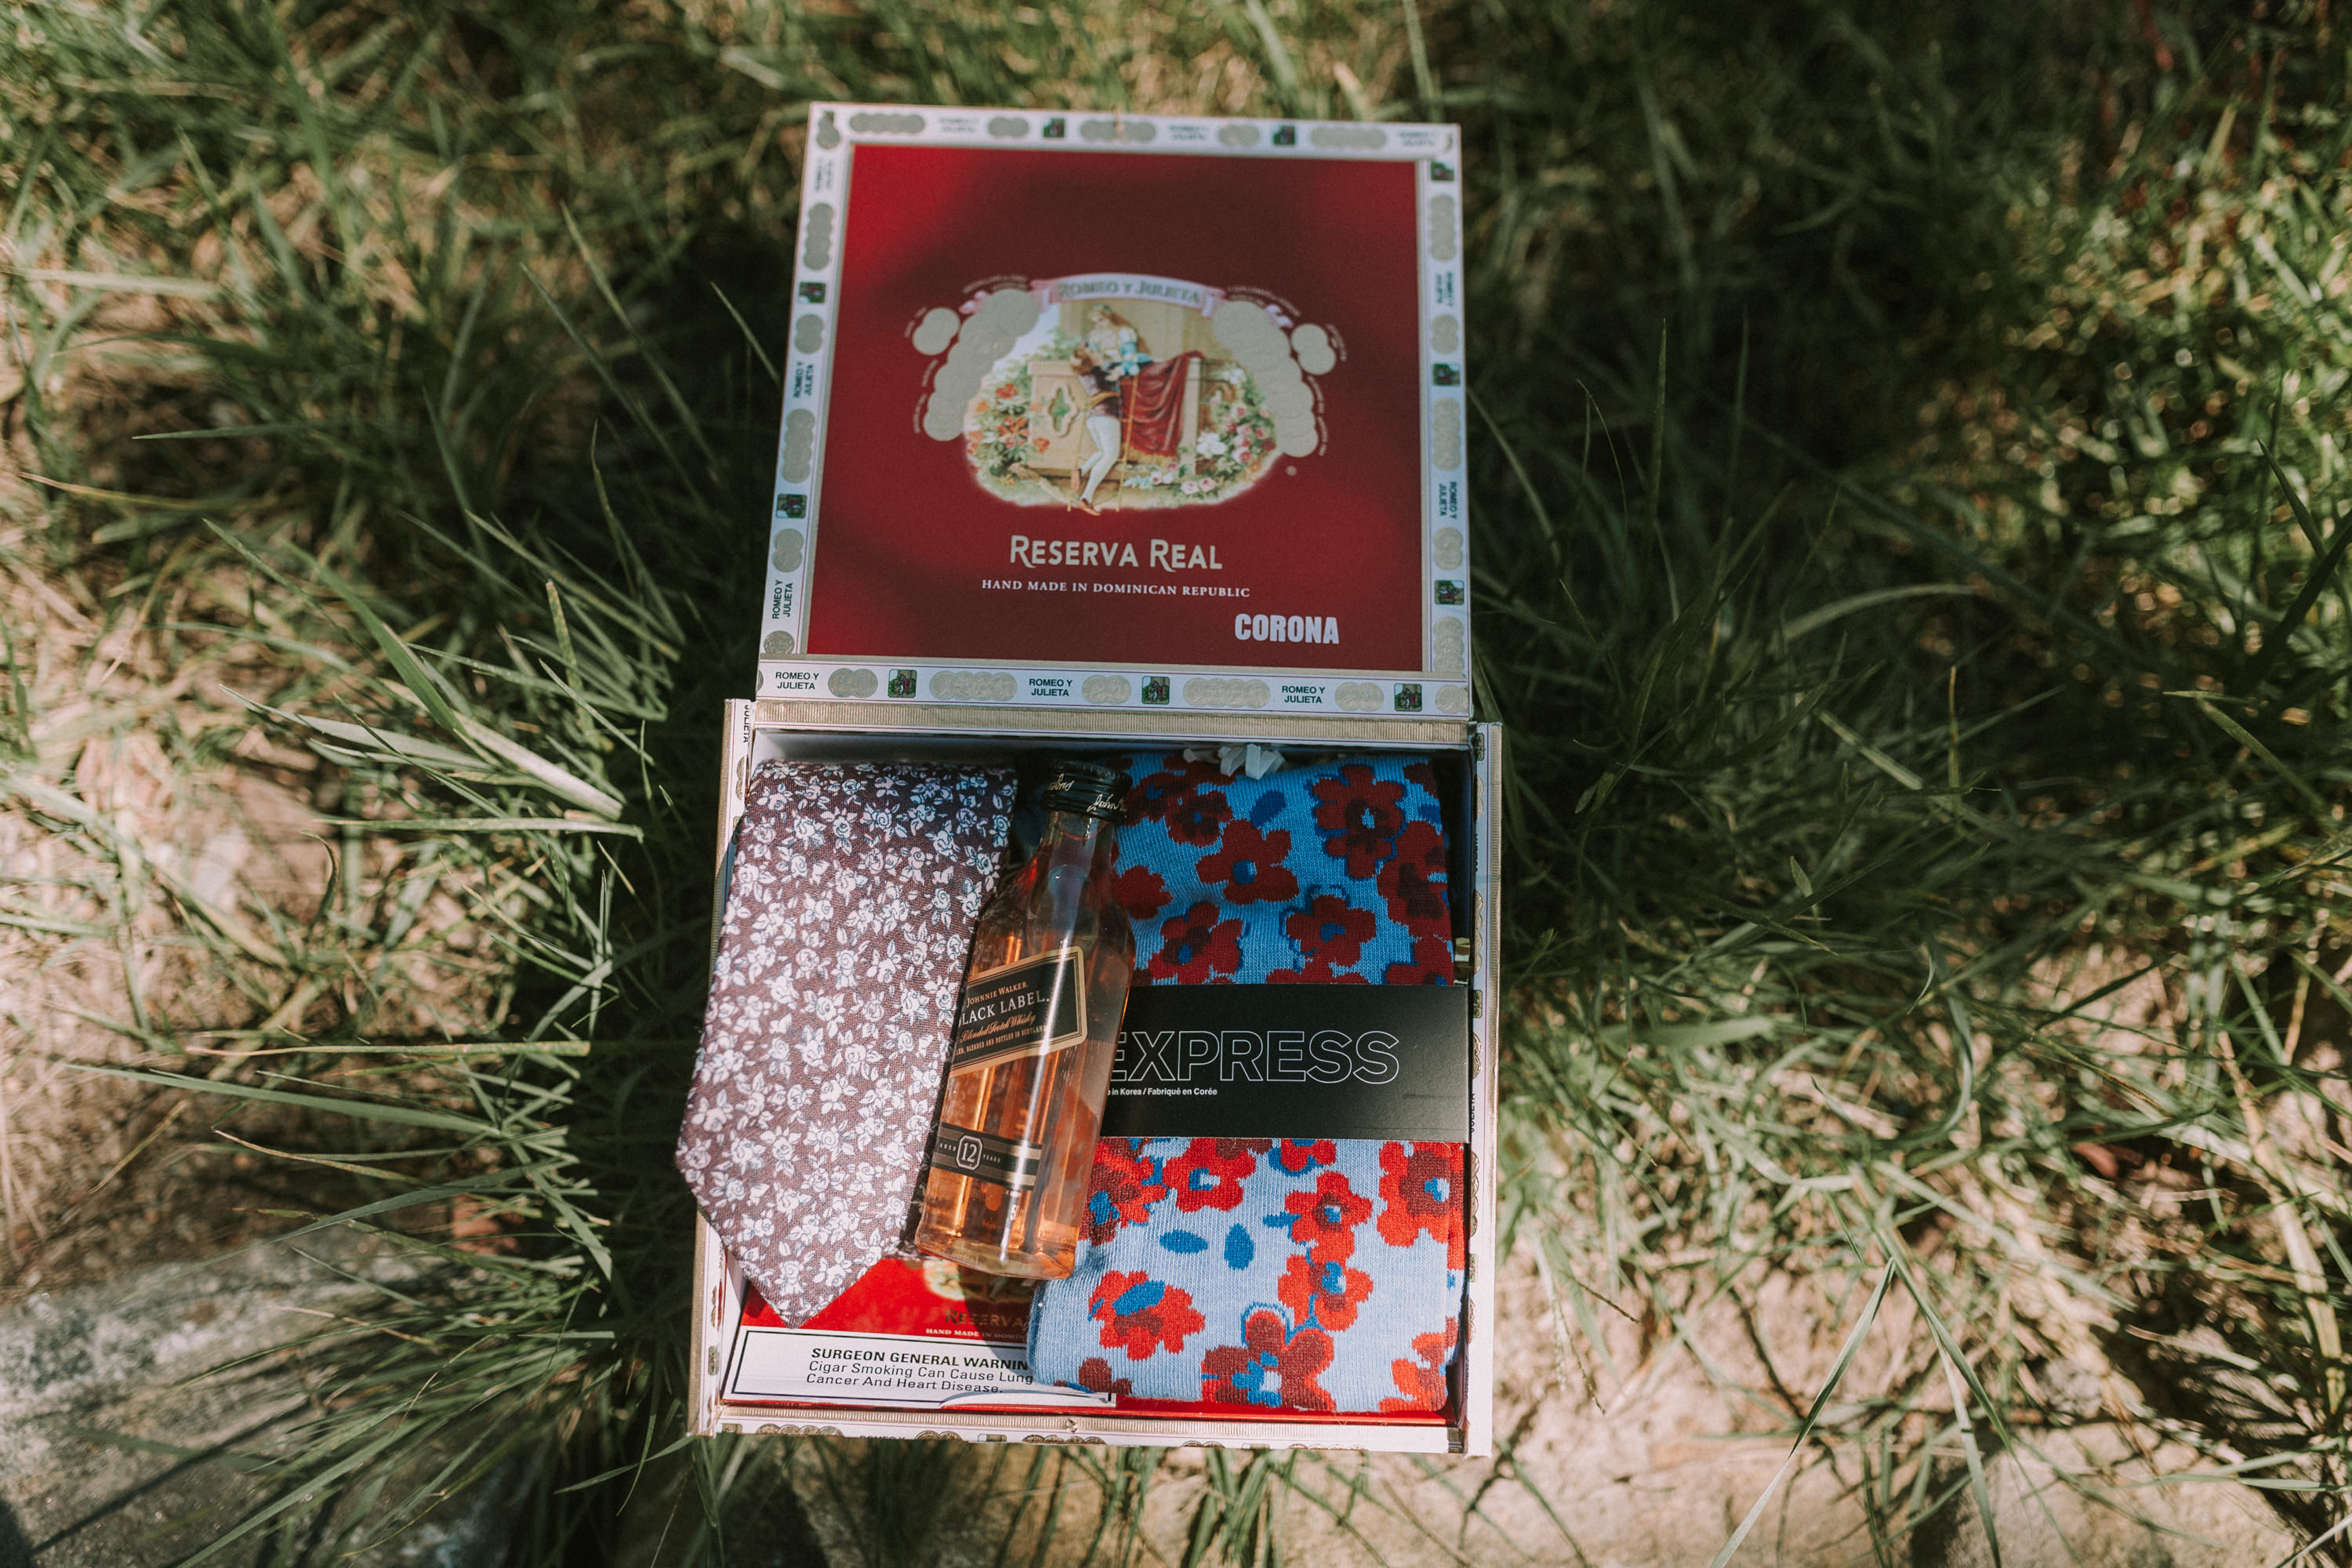 groomsmen gift, tie, groomsmen box on grass, whisky, nip, express tie, groomsmen gift cigar box, cigar box gift